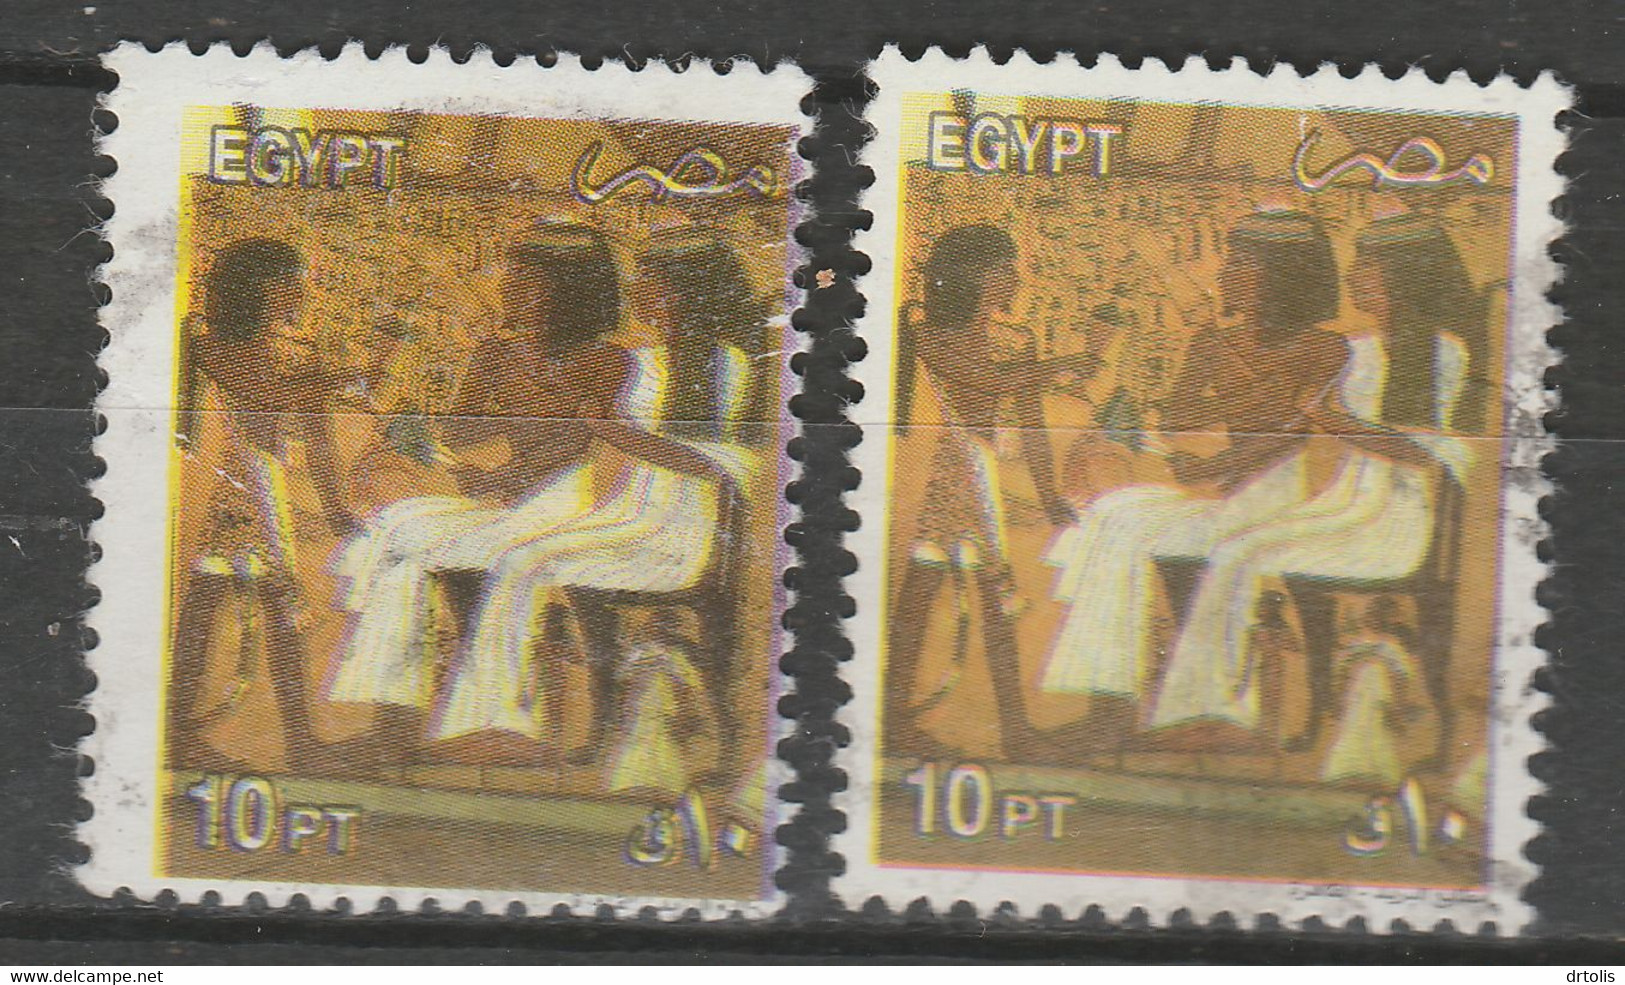 EGYPT / PERFORATION ERROR ERROR / VF USED - Usados